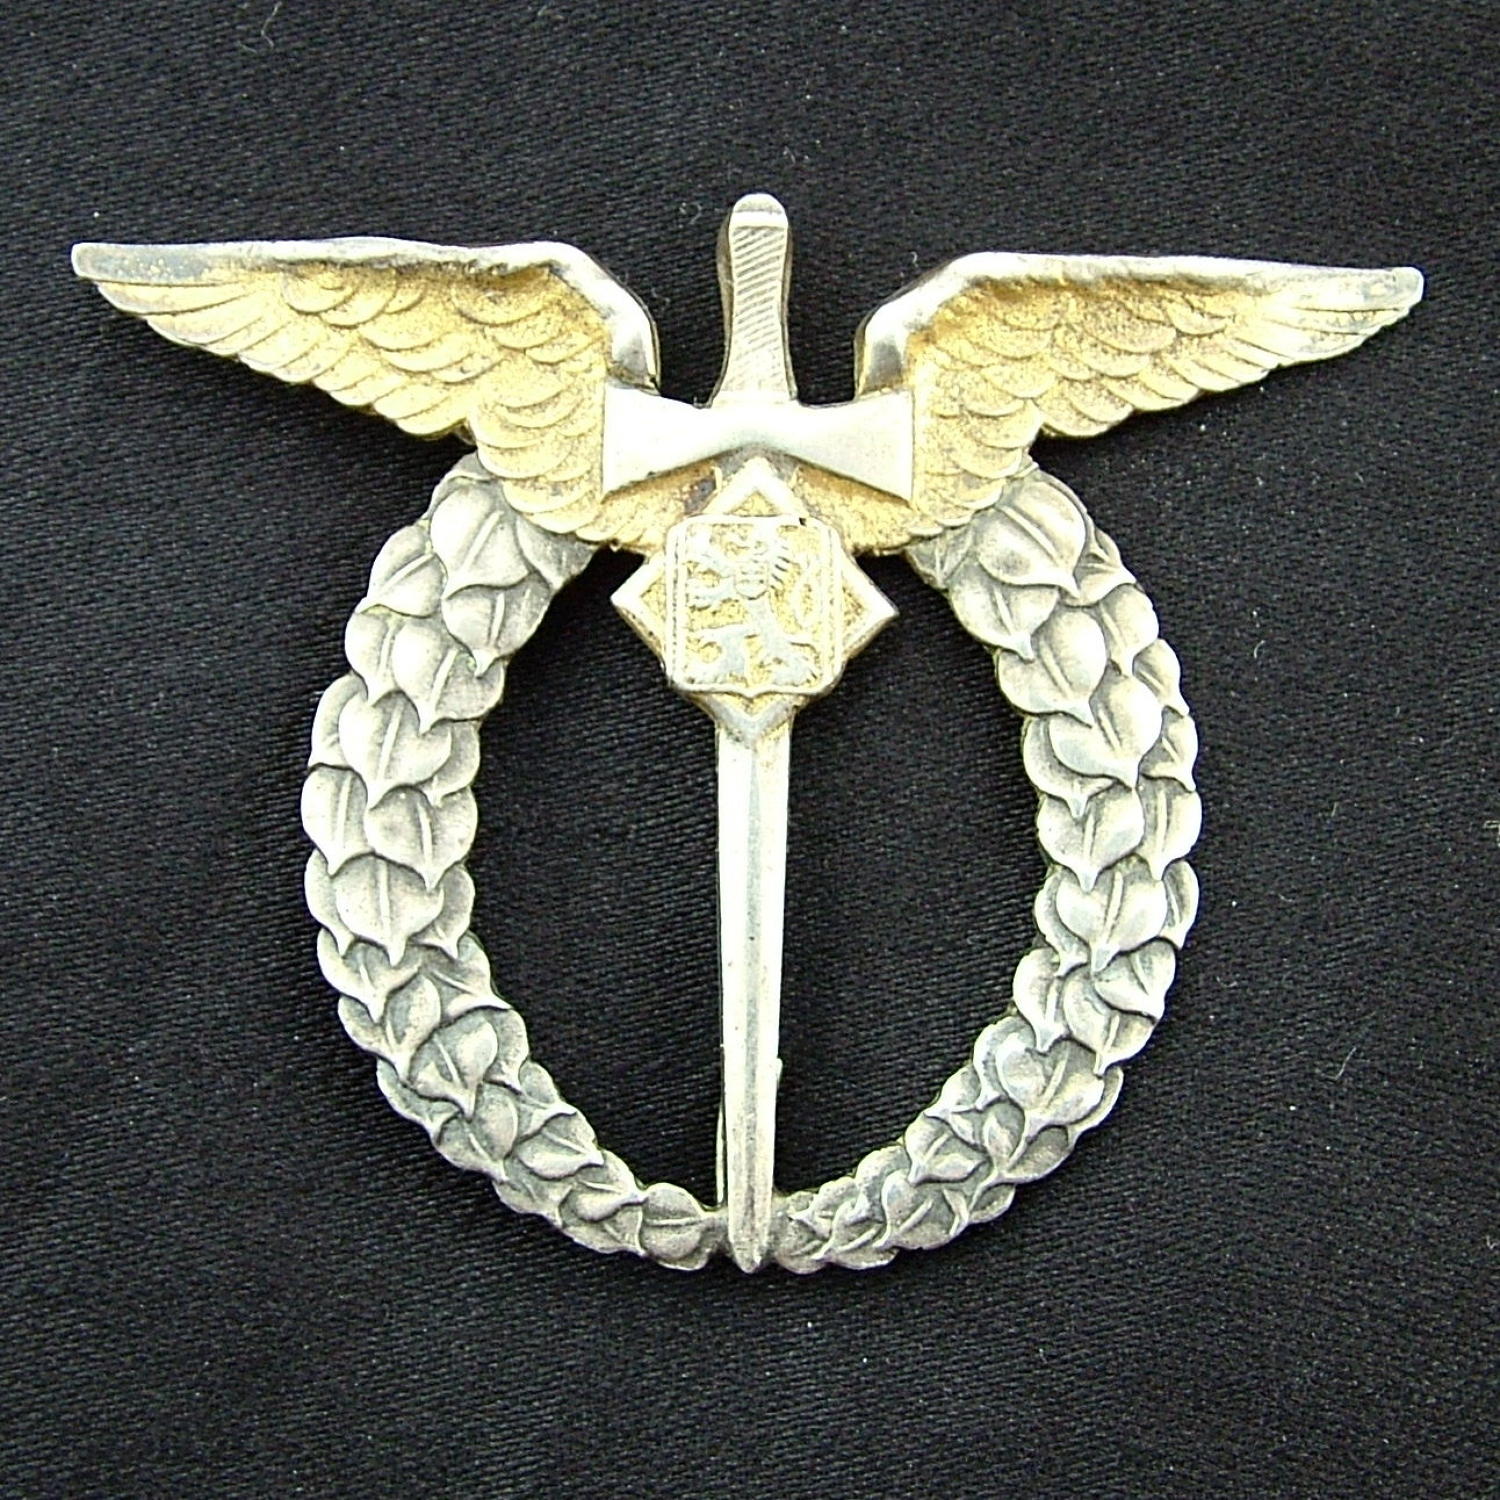 Czechoslovakian pilot's badge